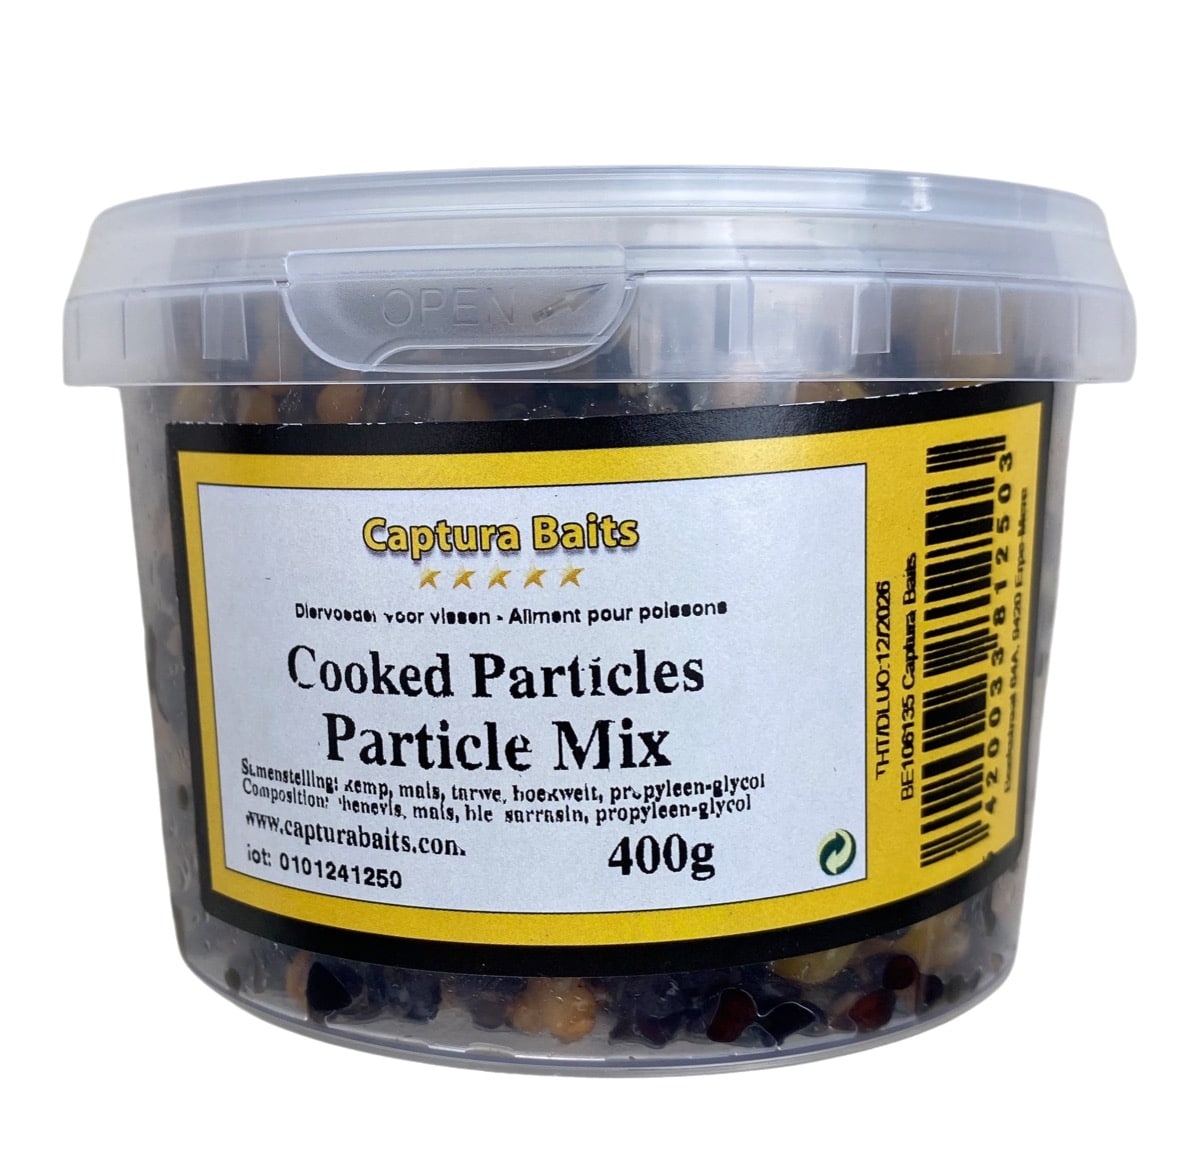 Captura Baits coocked particles mix 400g Jar